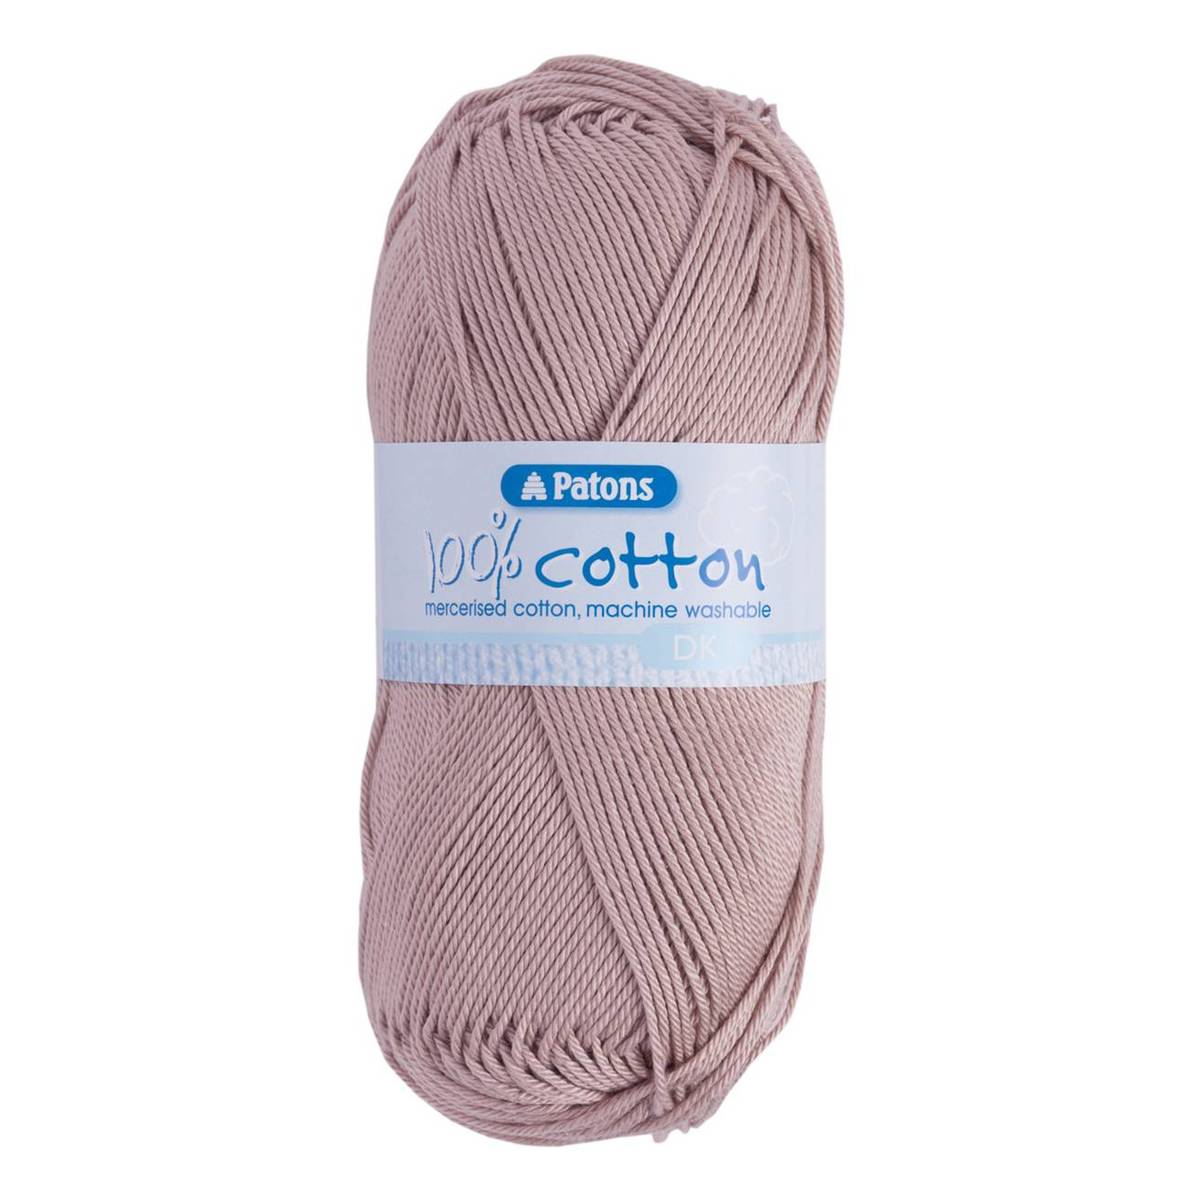 Patons 100% Cotton DK - Raffia (2714)